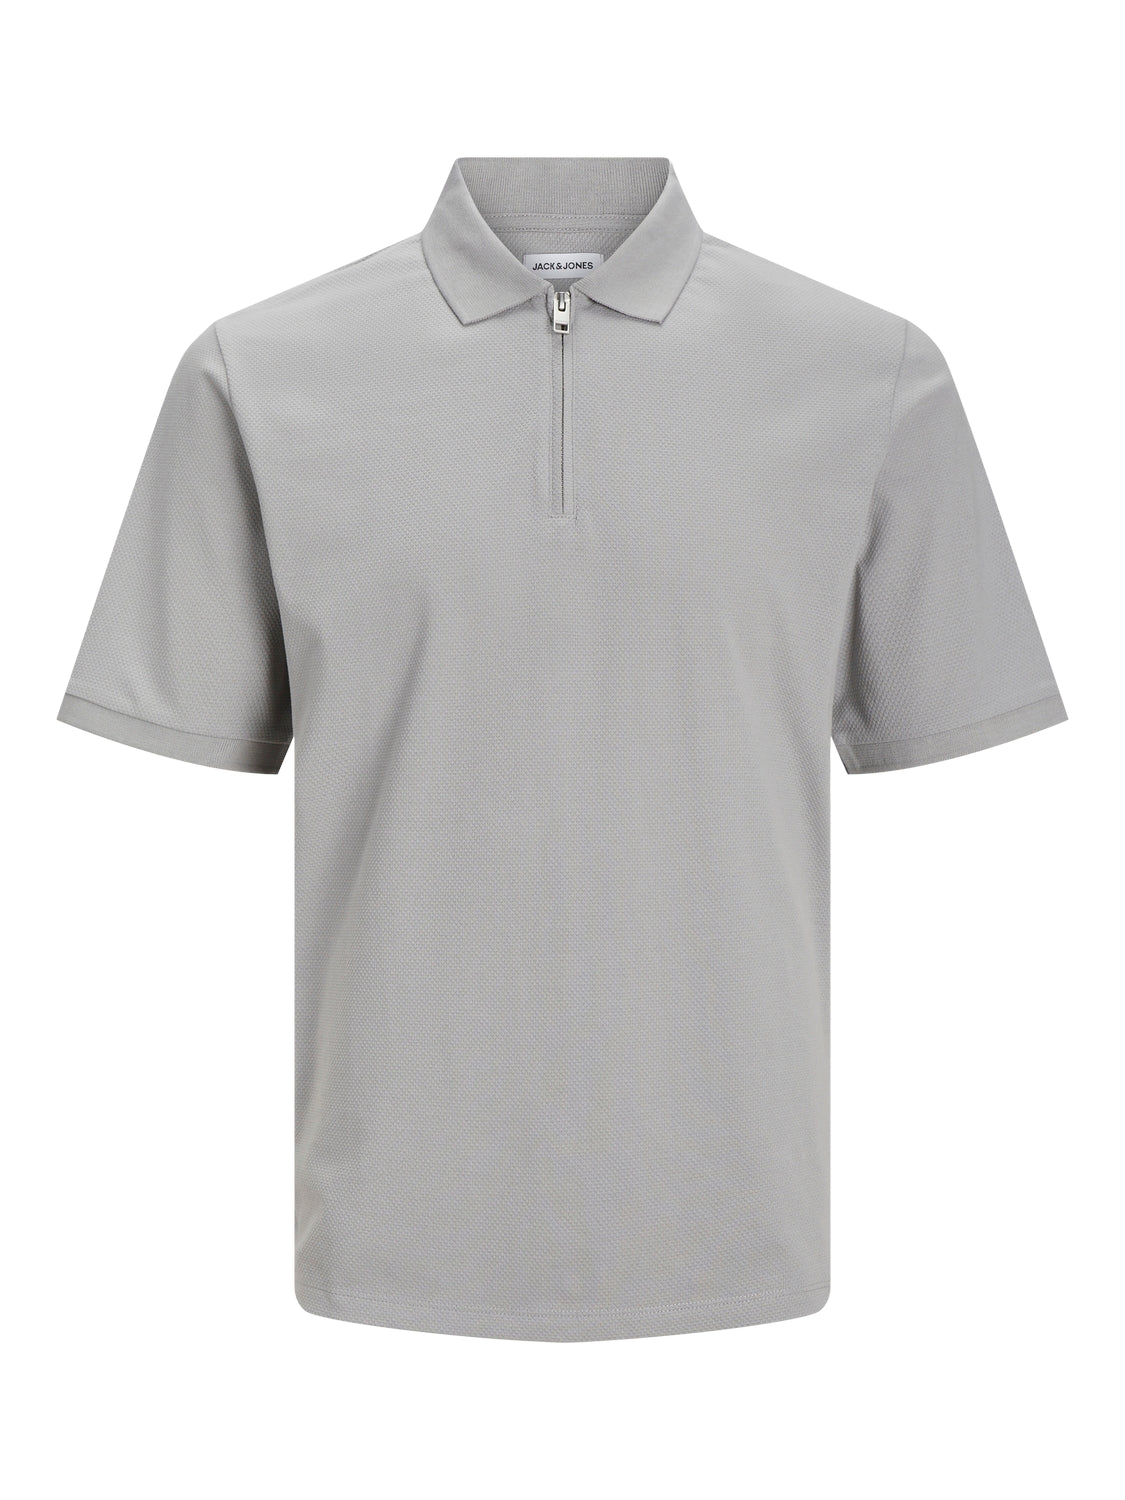 Men's Mac Zip Short Sleeve Polo-Ultimate Grey-Front View